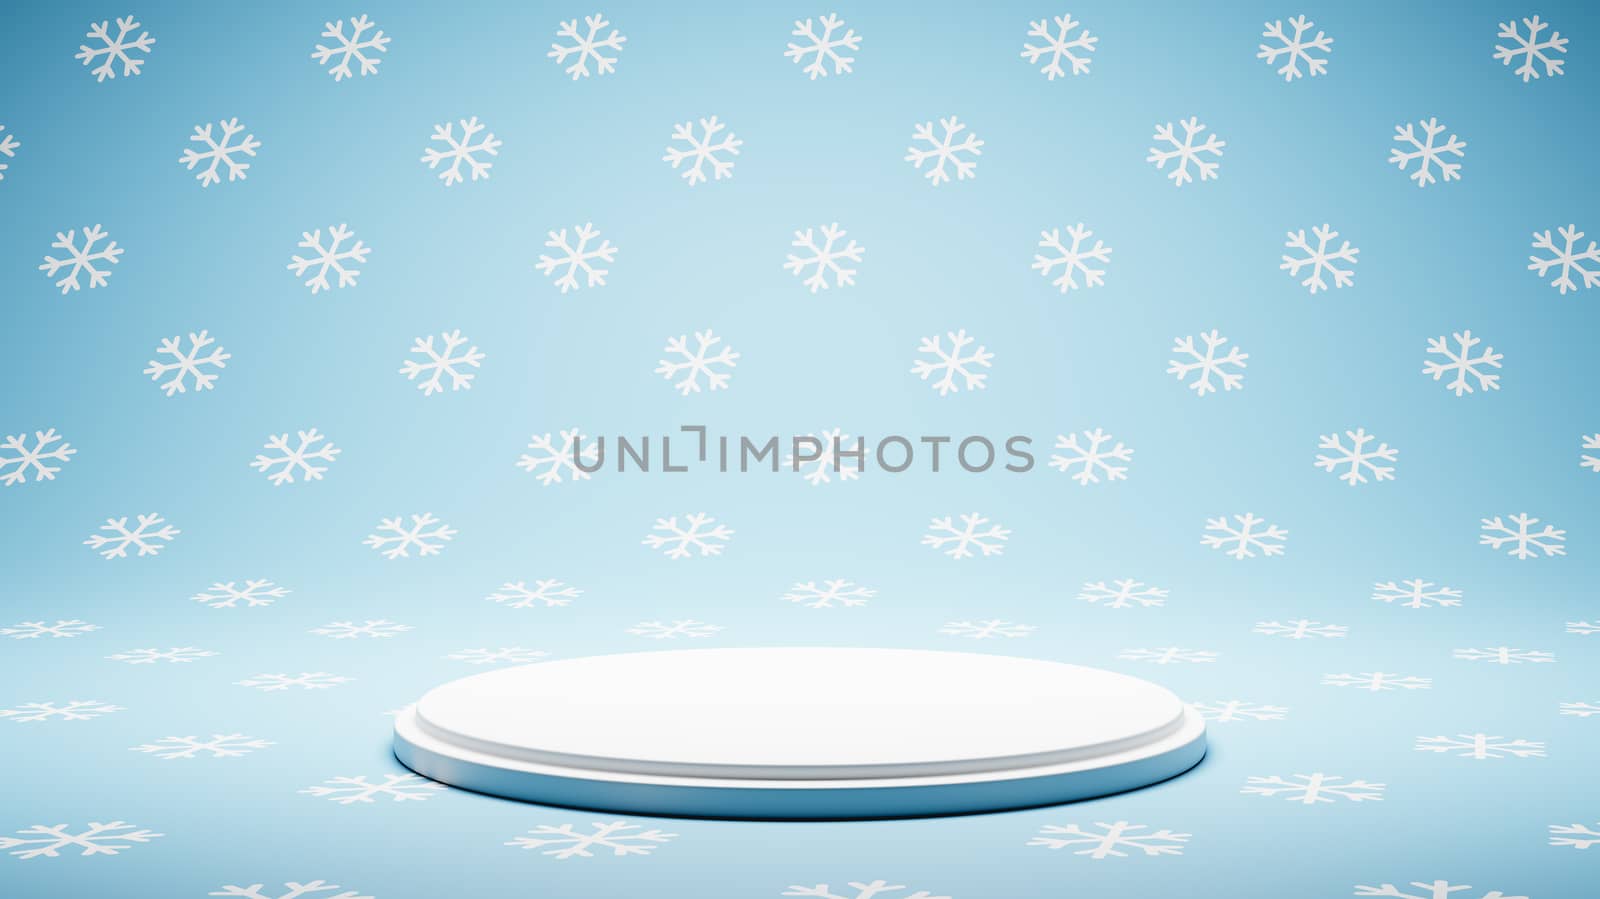 Empty White Platform on Blue Snow Pattern Studio Background 3D Render Illustration